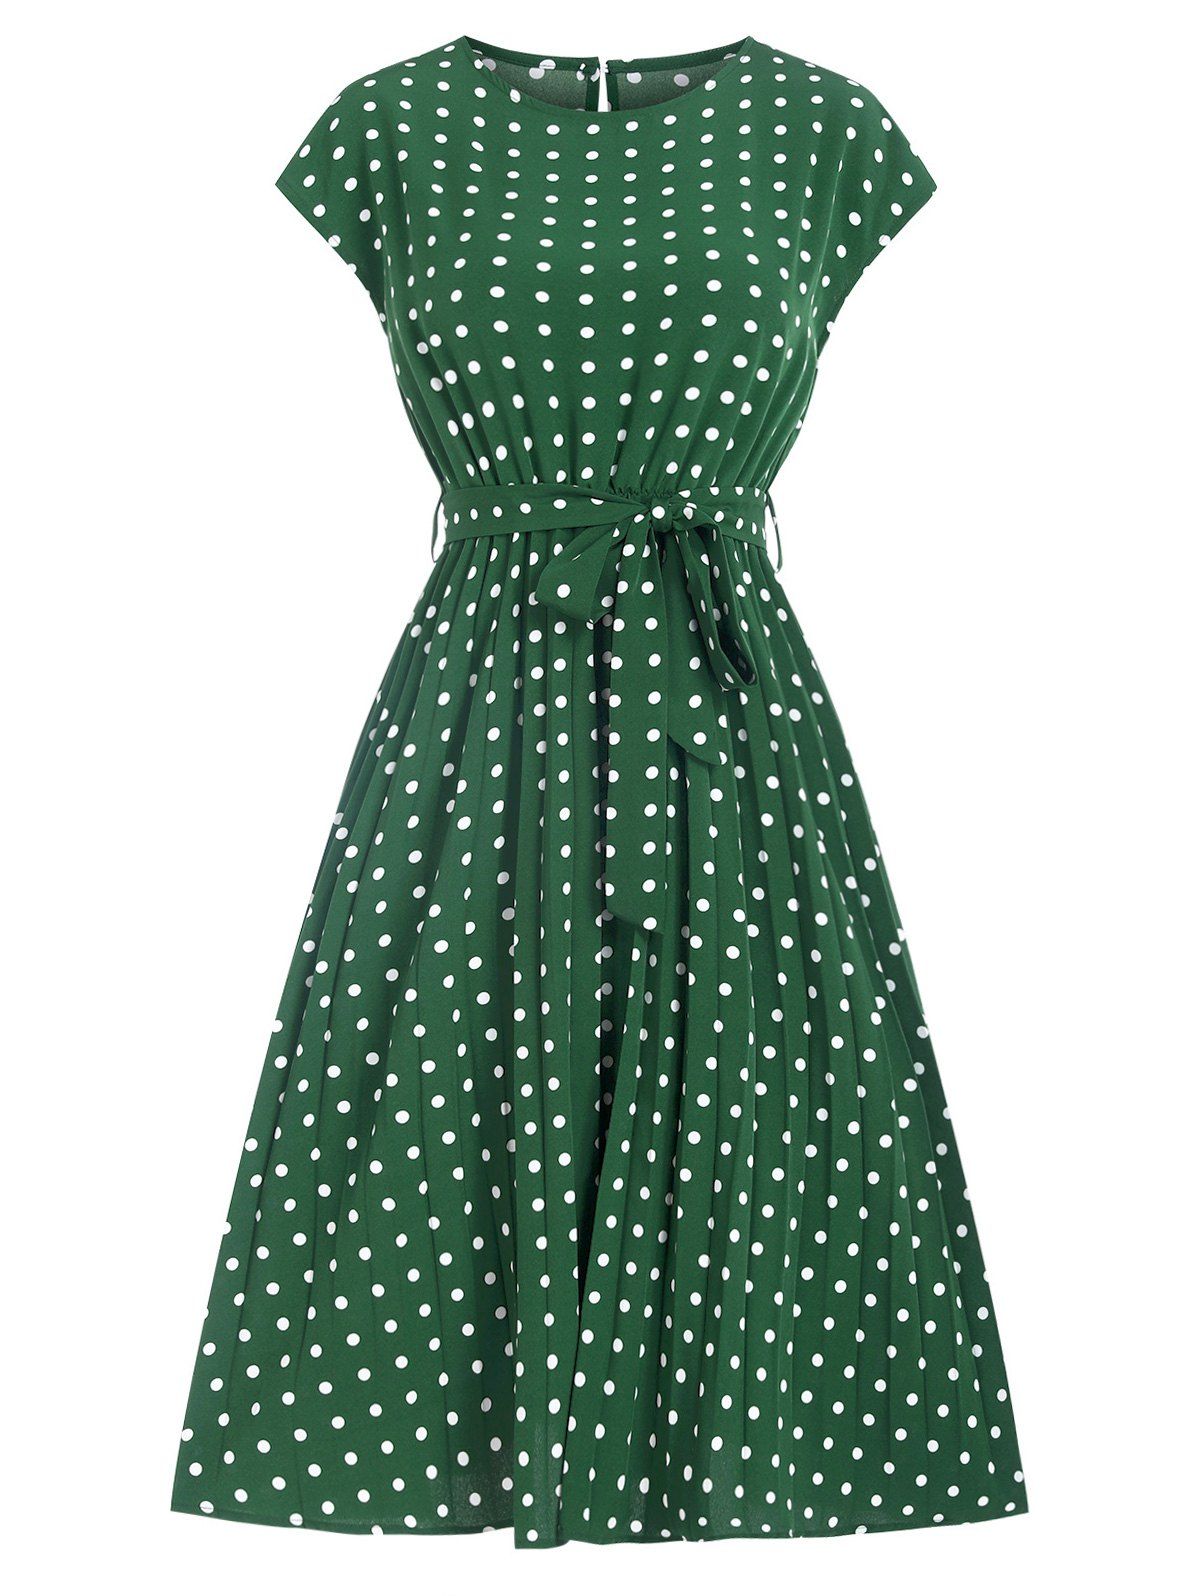 Polka Dot Cap Sleeve Pleated Belted Dress - DEEP GREEN S